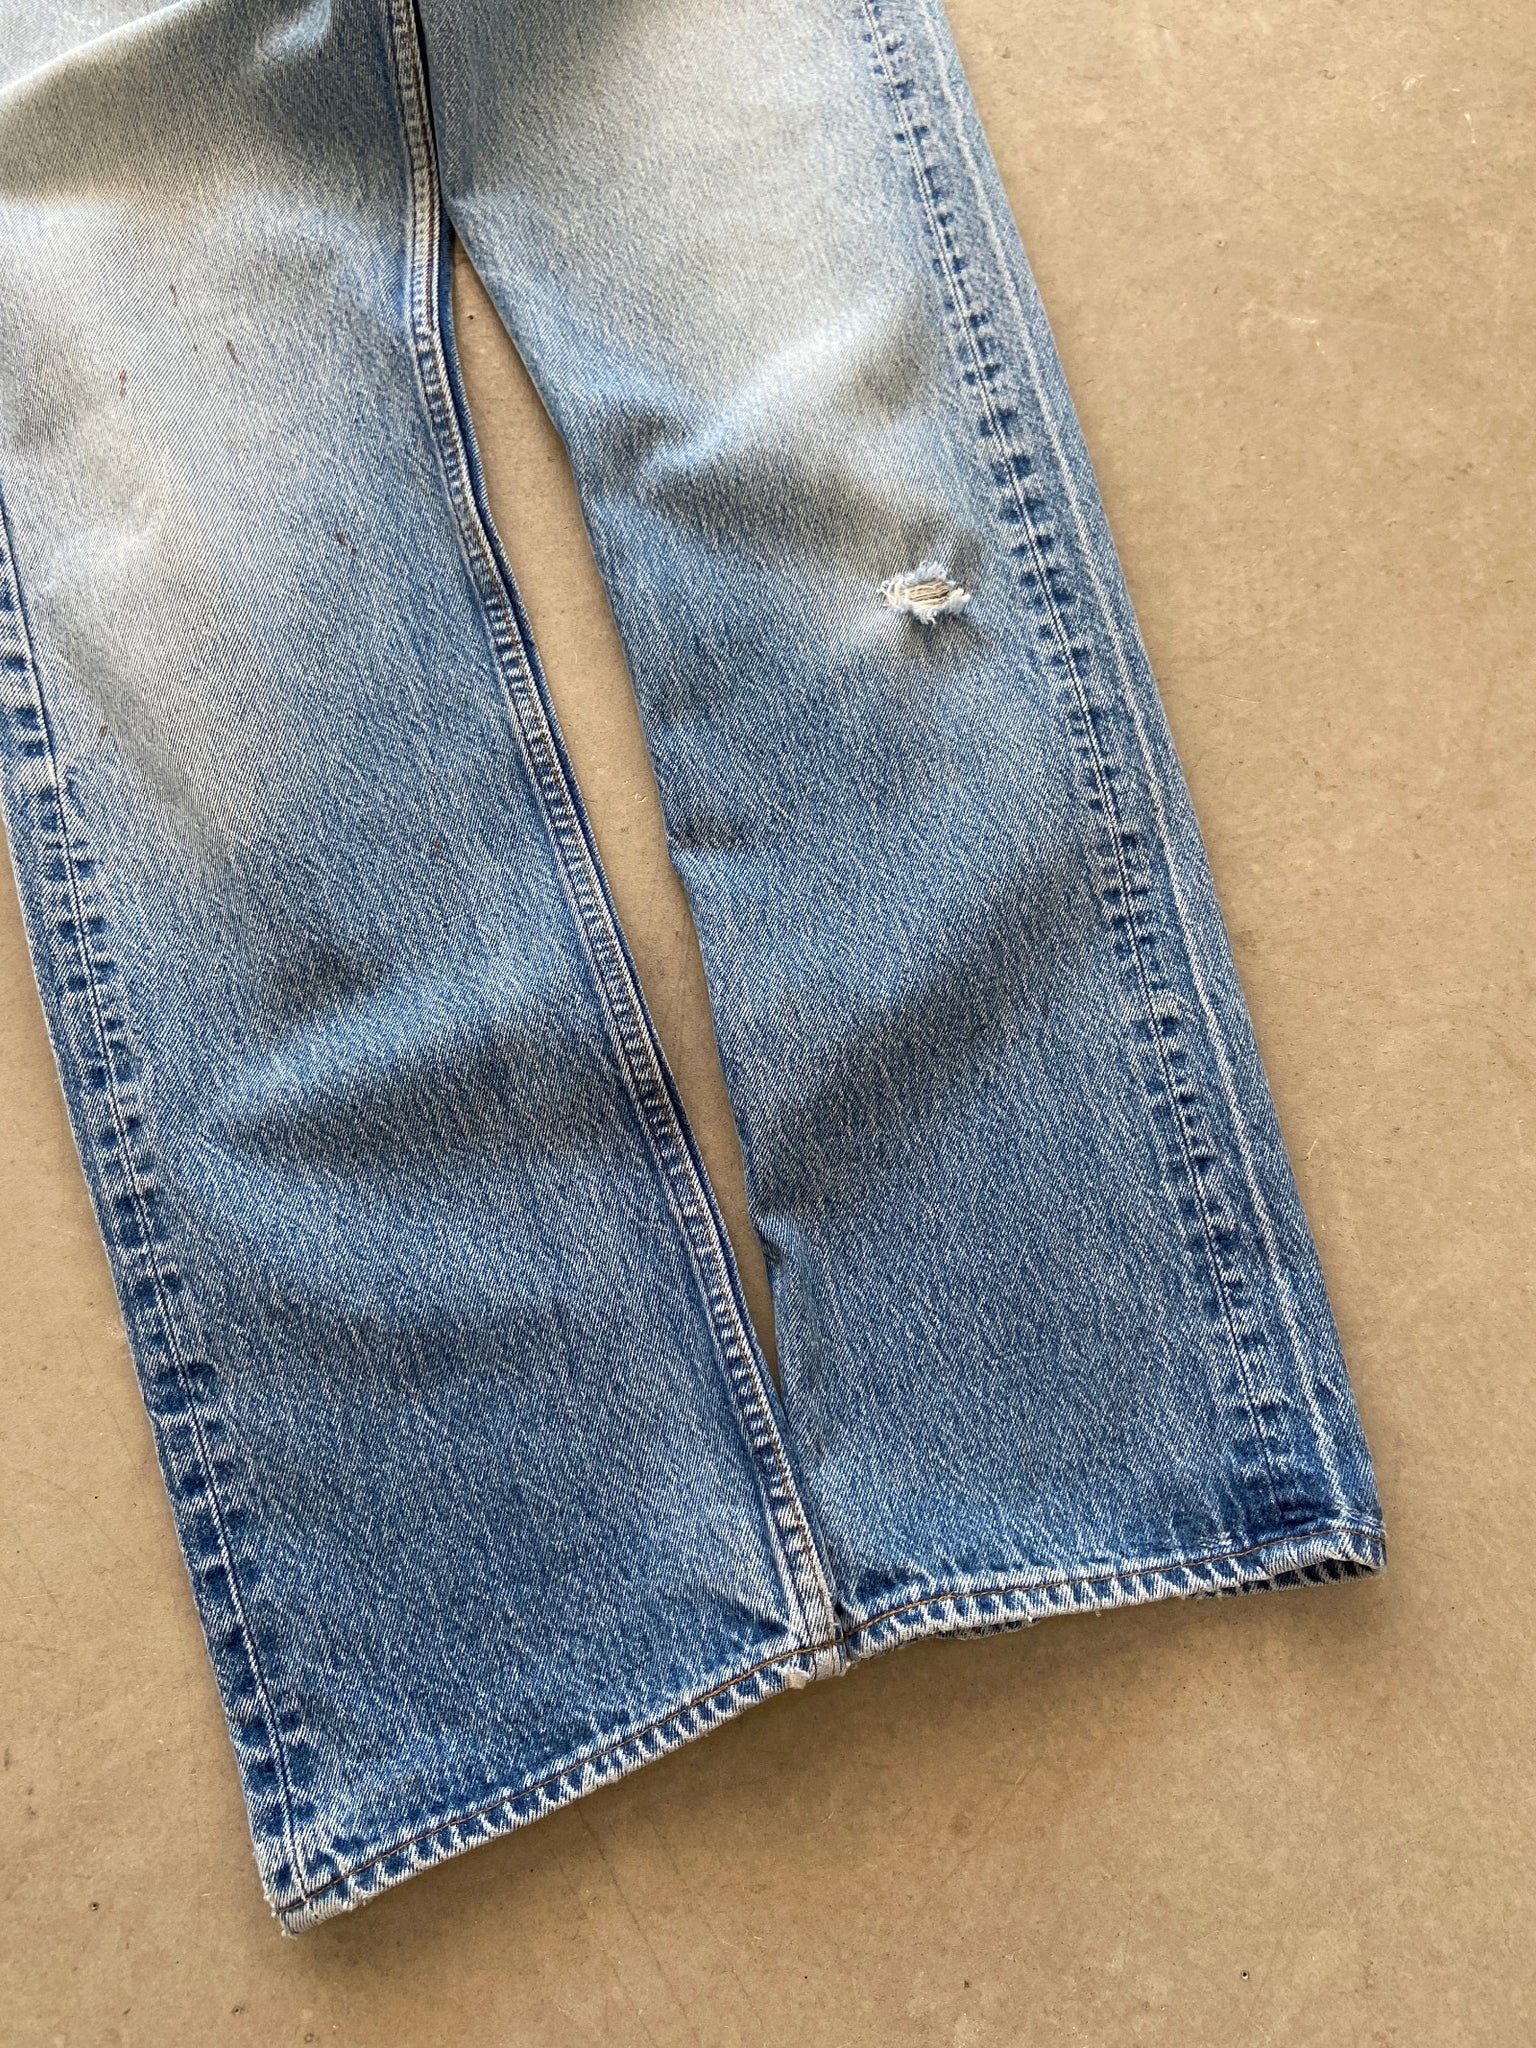 1990's Levi's 501 Jeans - 31 x 32